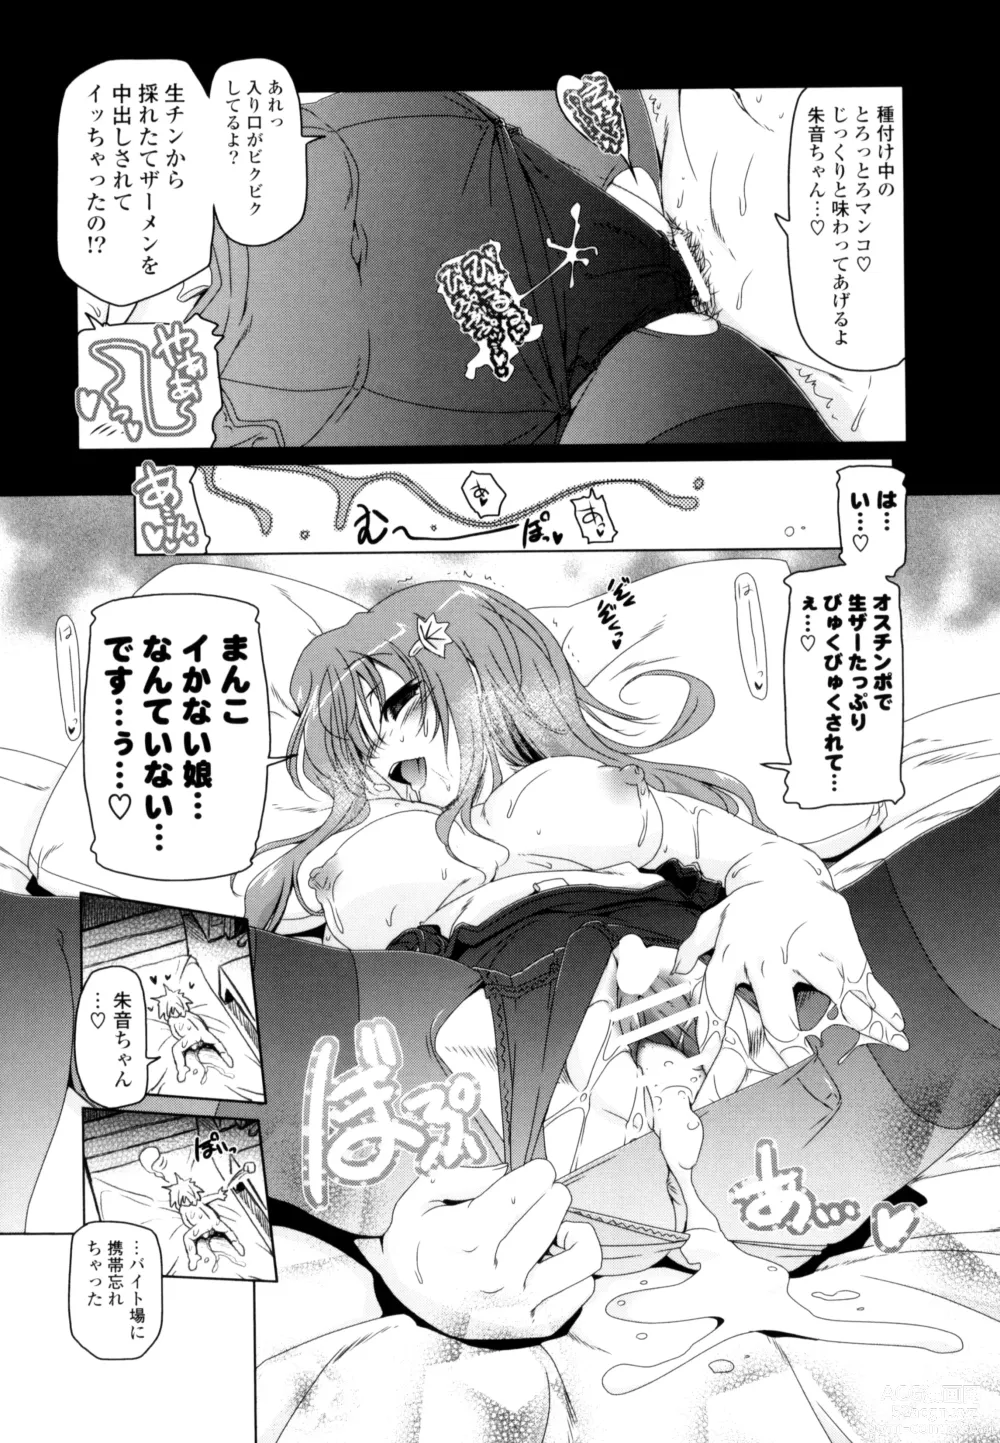 Page 9 of manga NAMA NAKA 100%!